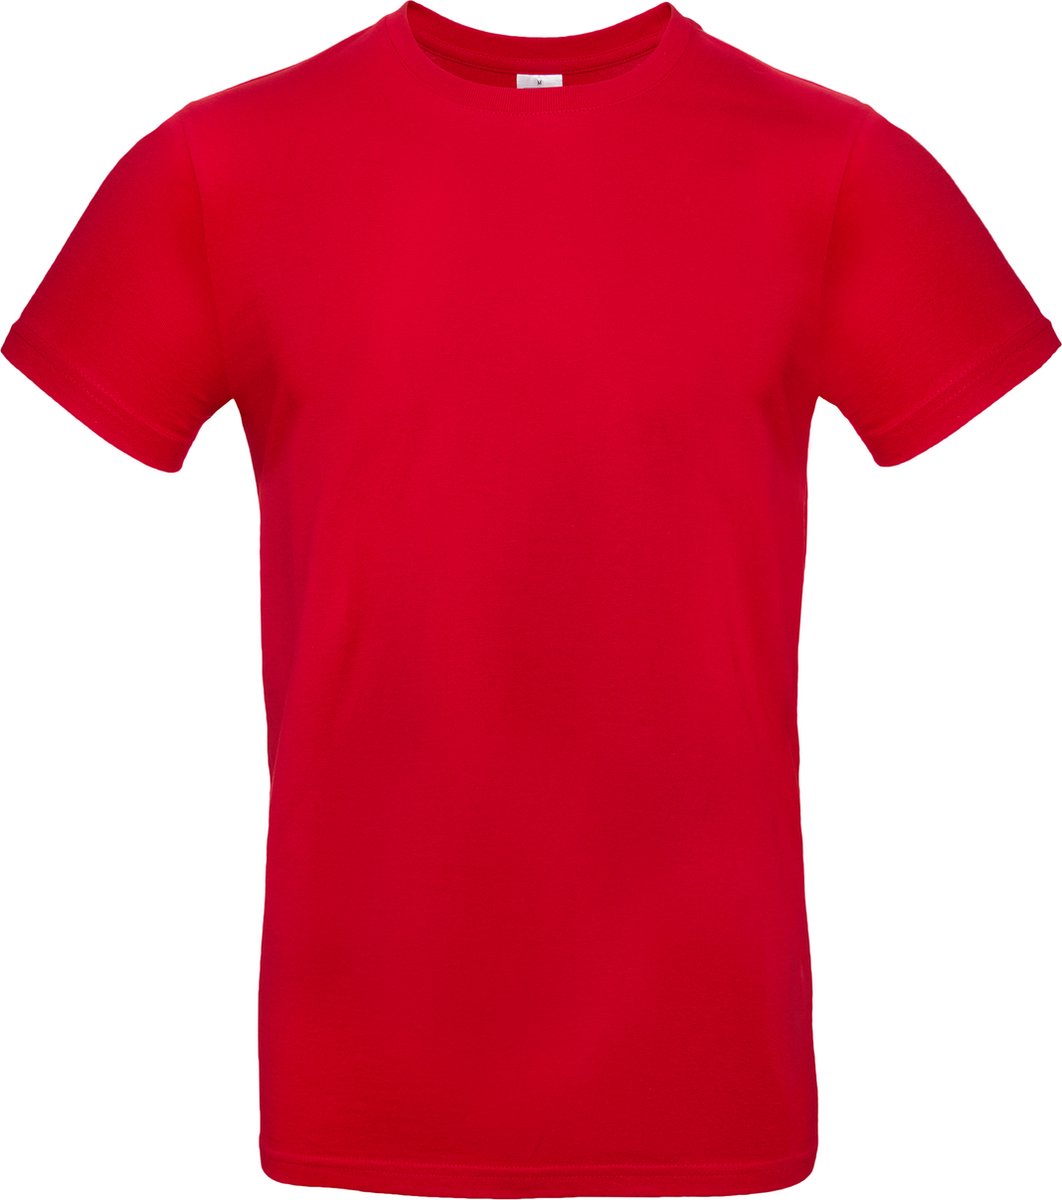 B&C Exact 190 T-Shirt - Ronde Hals - Unisex - Rood - Small